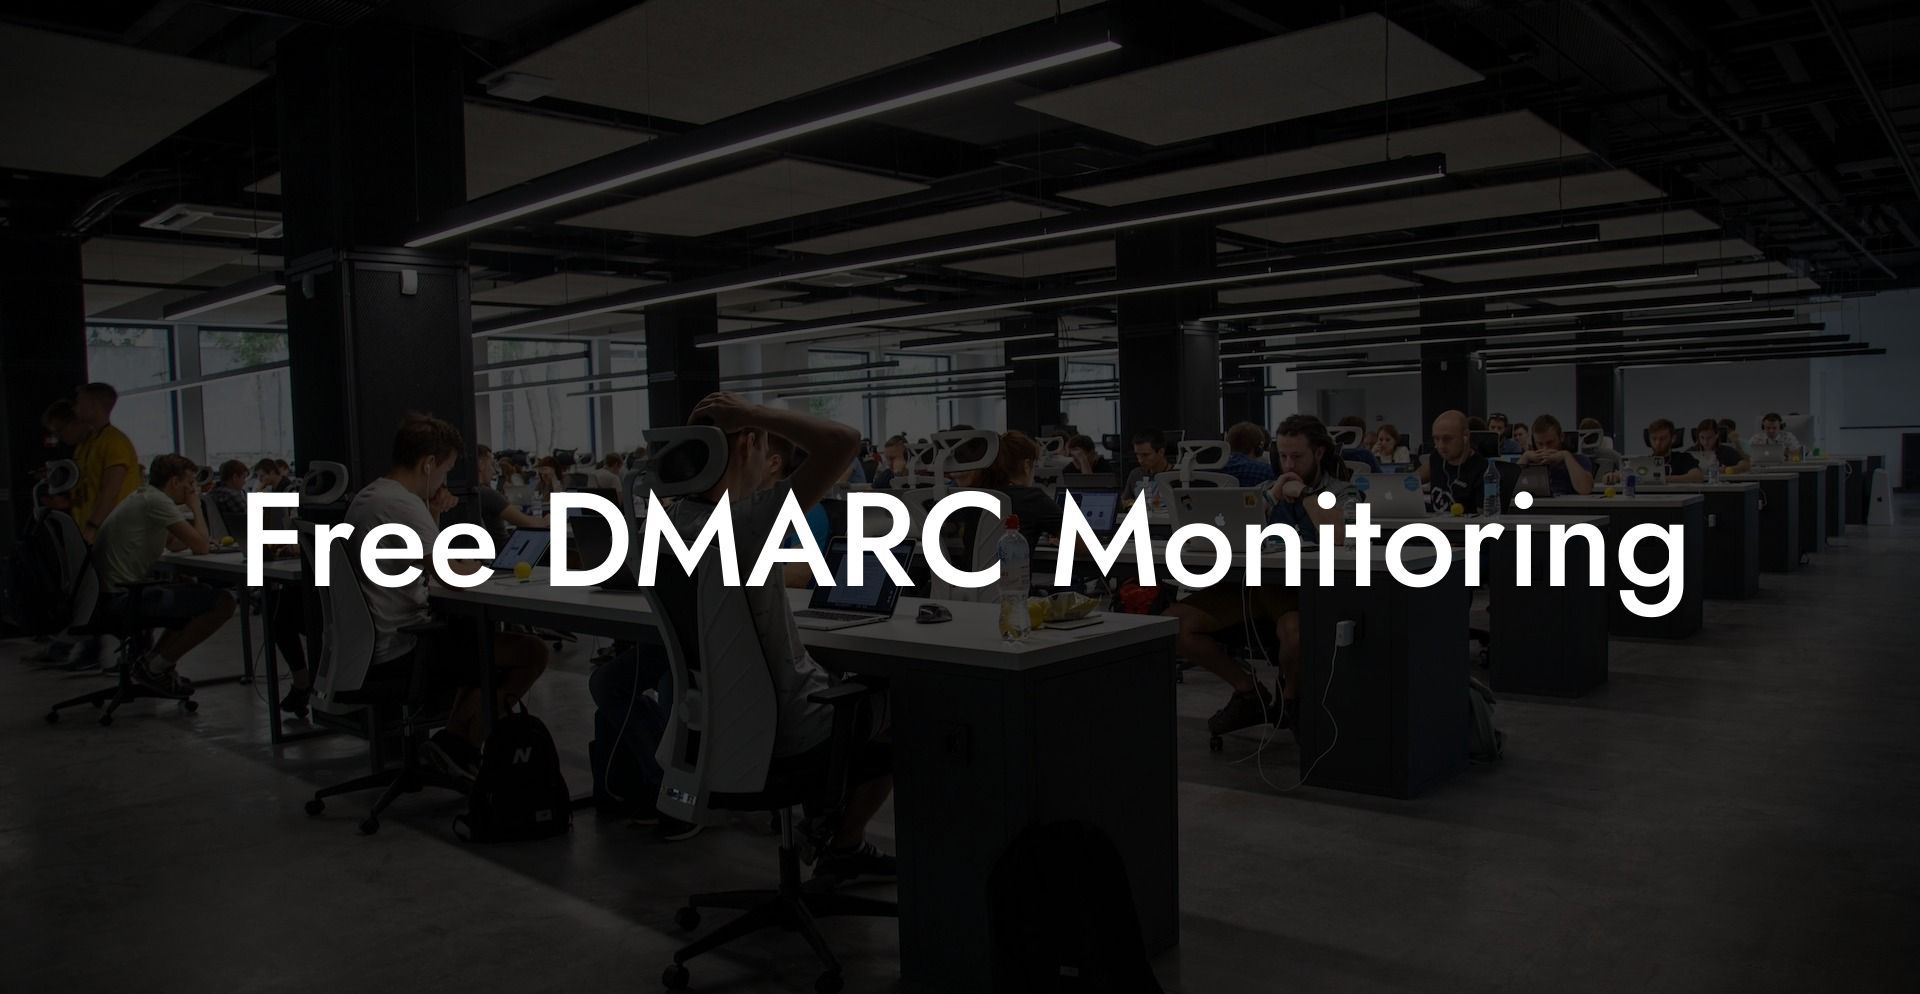 Free DMARC Monitoring